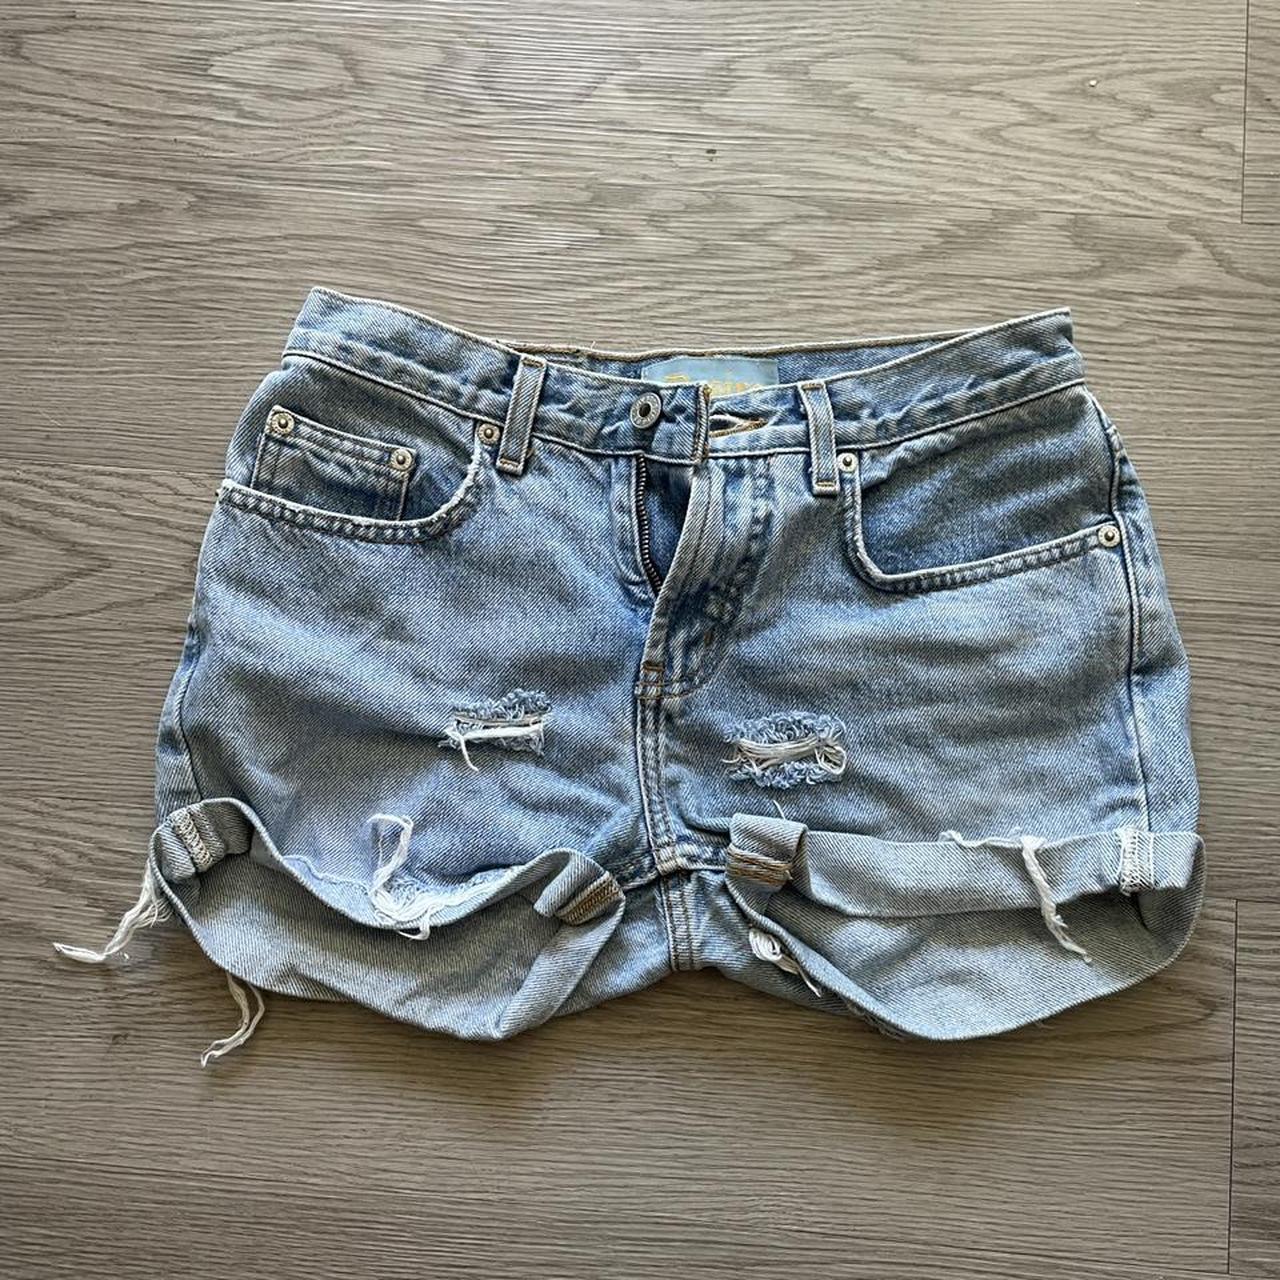 Product Image 1 - light wash jean shorts

size 24

#lightwash